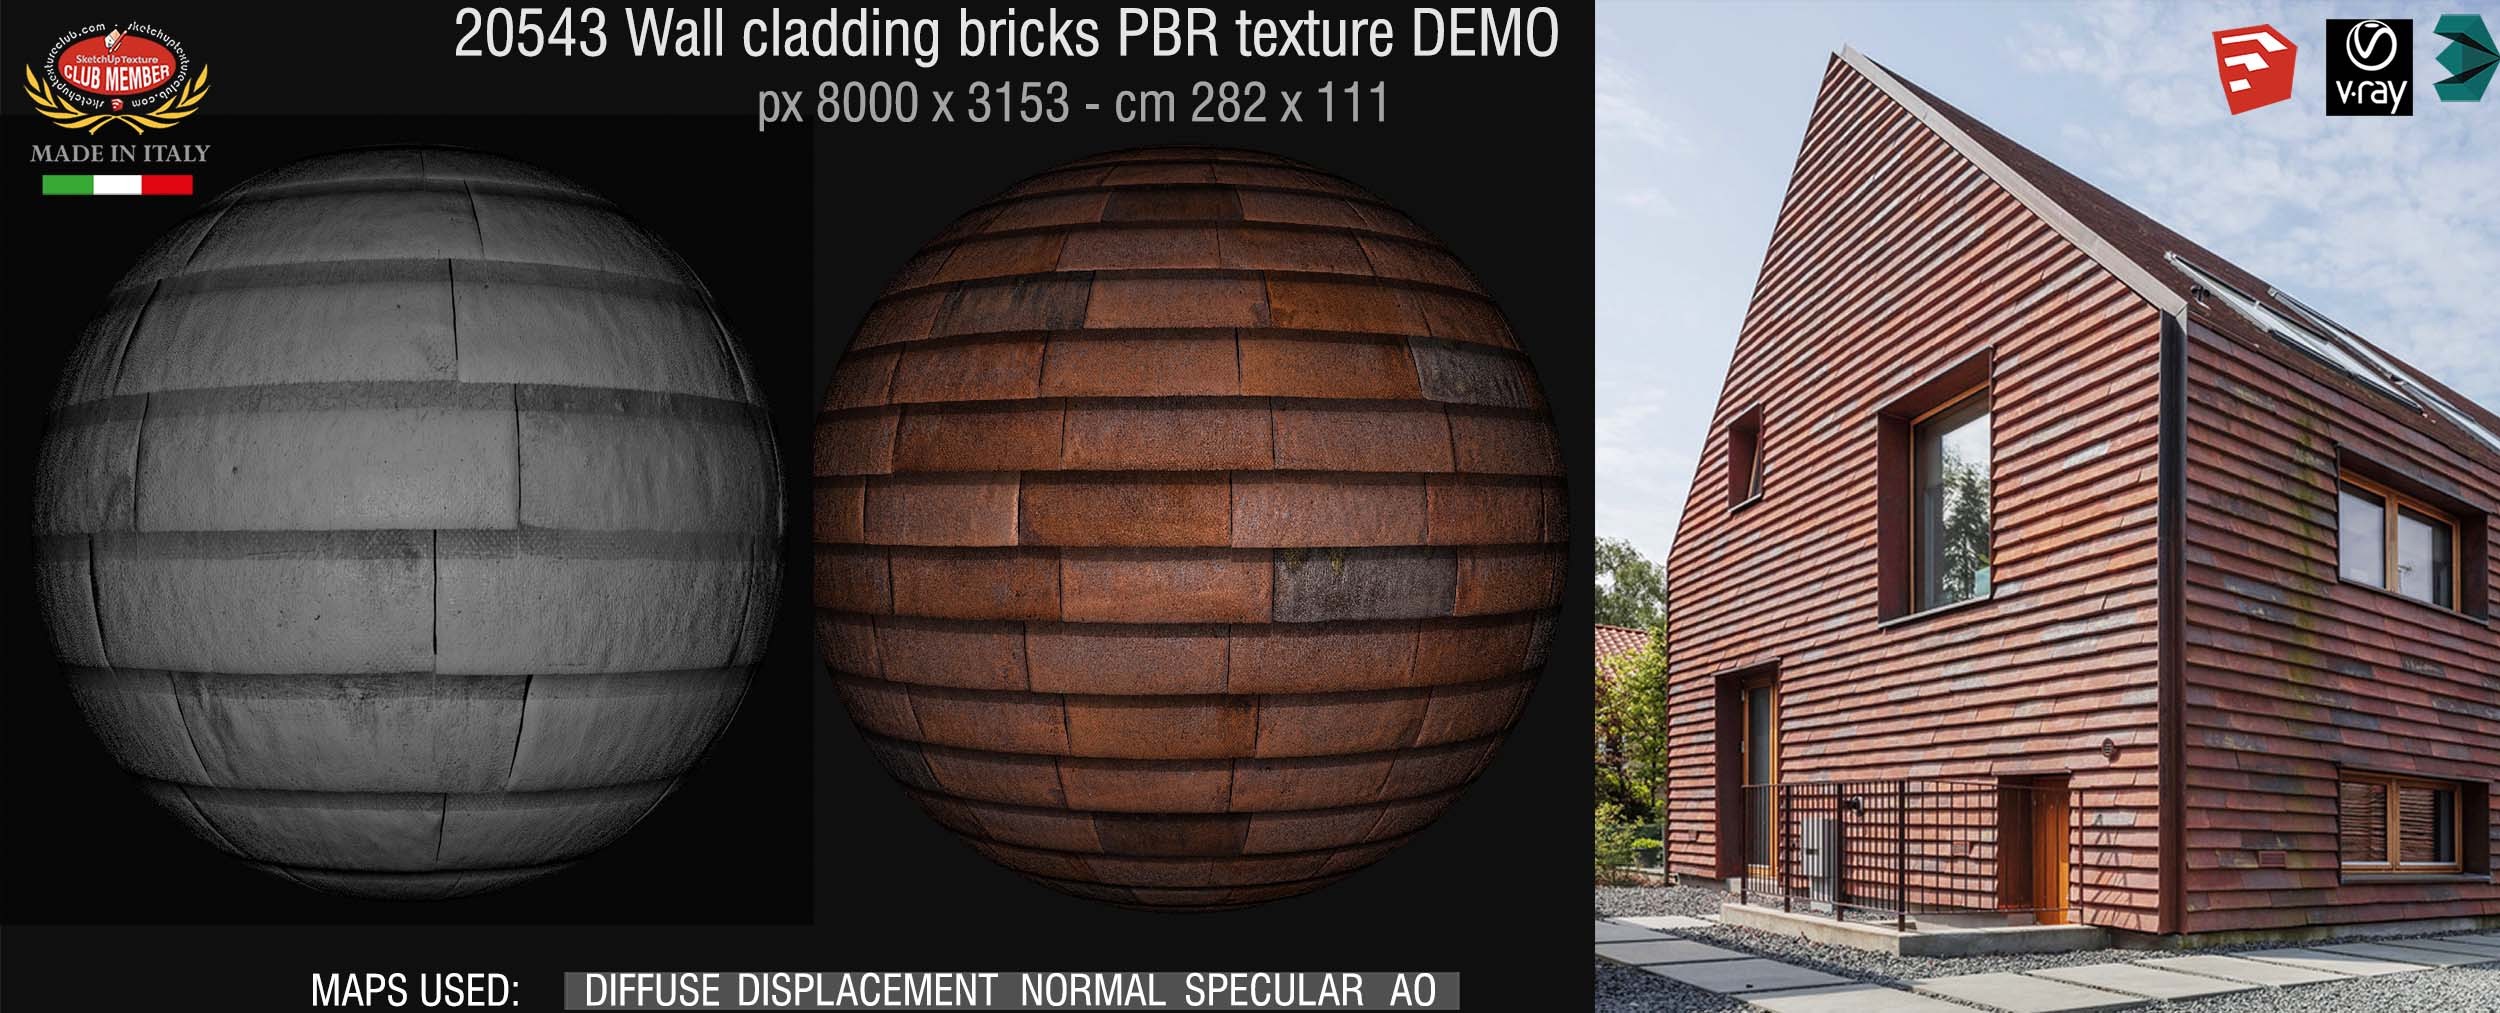 21543 wall cladding bricks PBR texture seamless DEMO